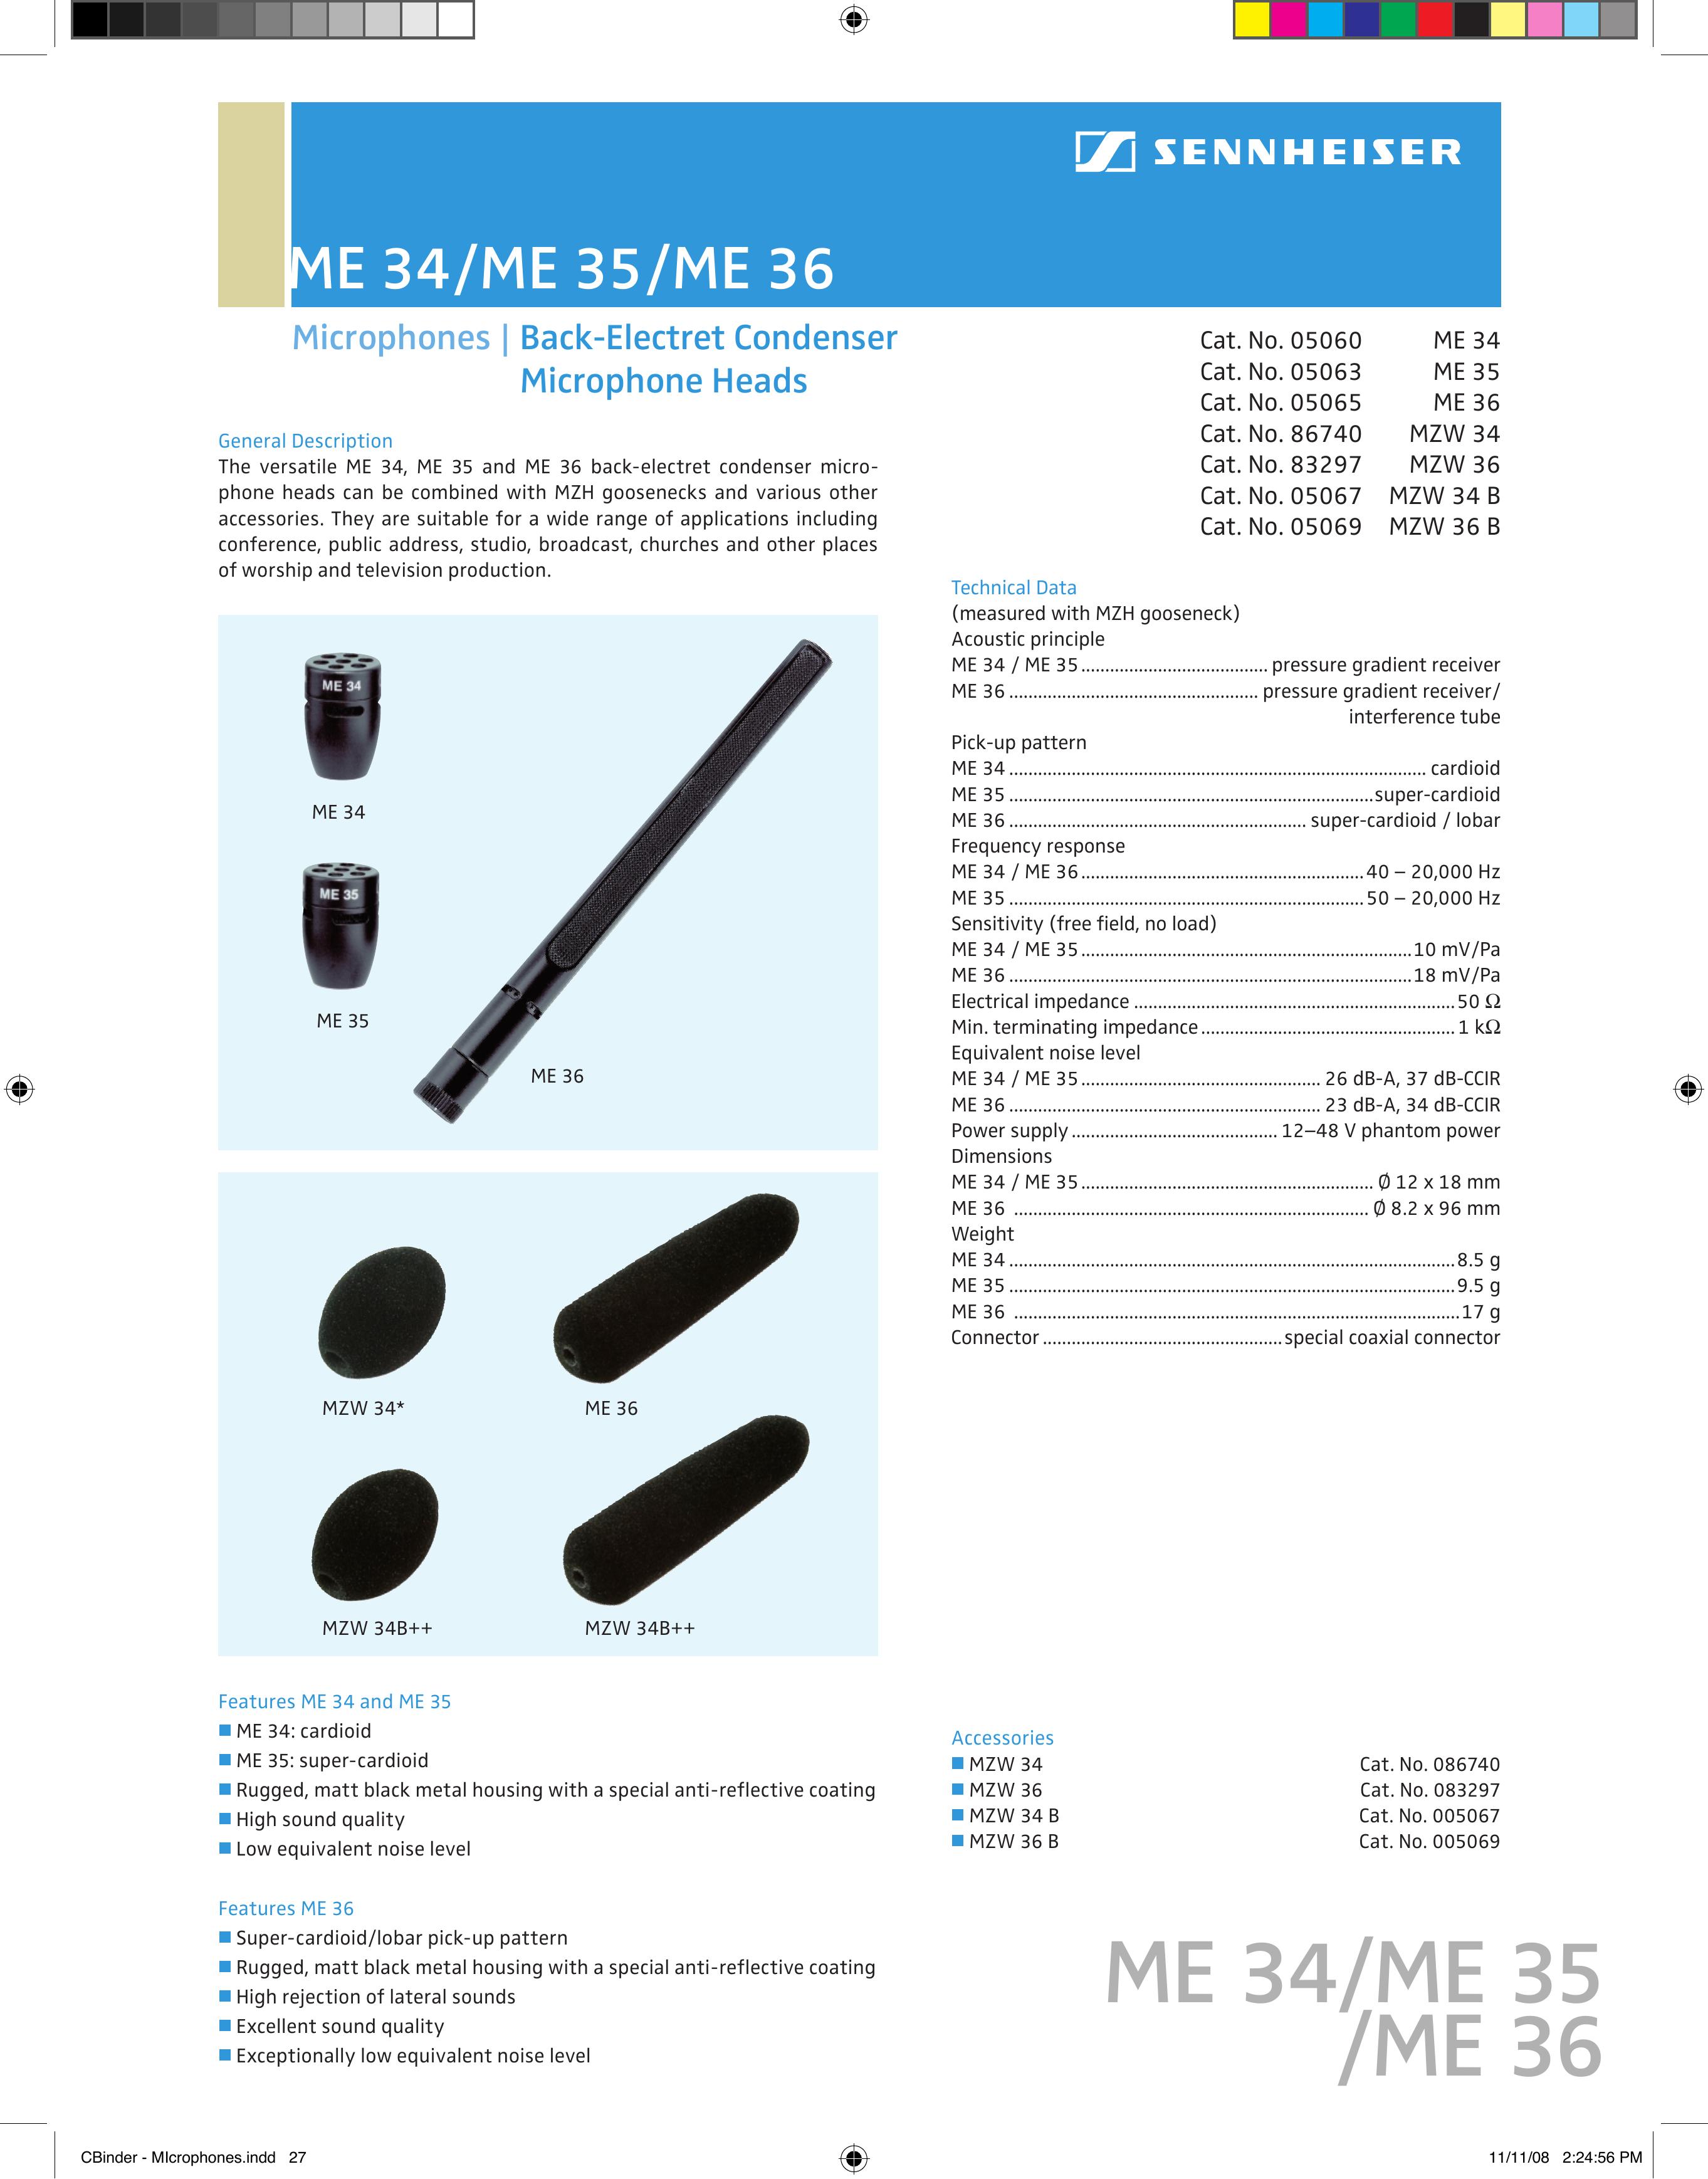 Sennheiser 086740 Microphone User Manual